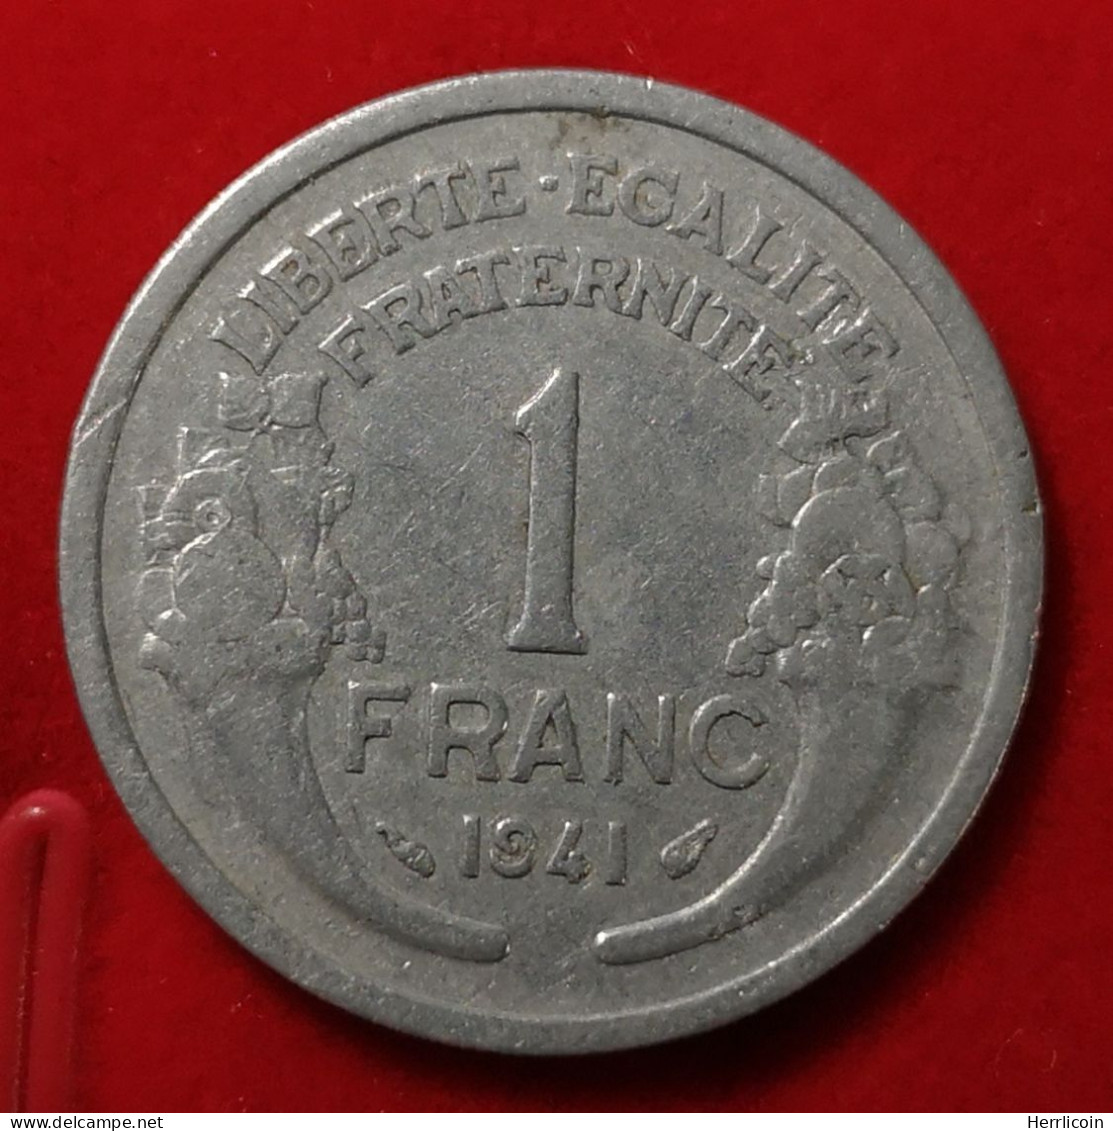 Monnaie France - 1941 - 1 Franc Morlon Aluminium, Légère (1,3g) - 1 Franc